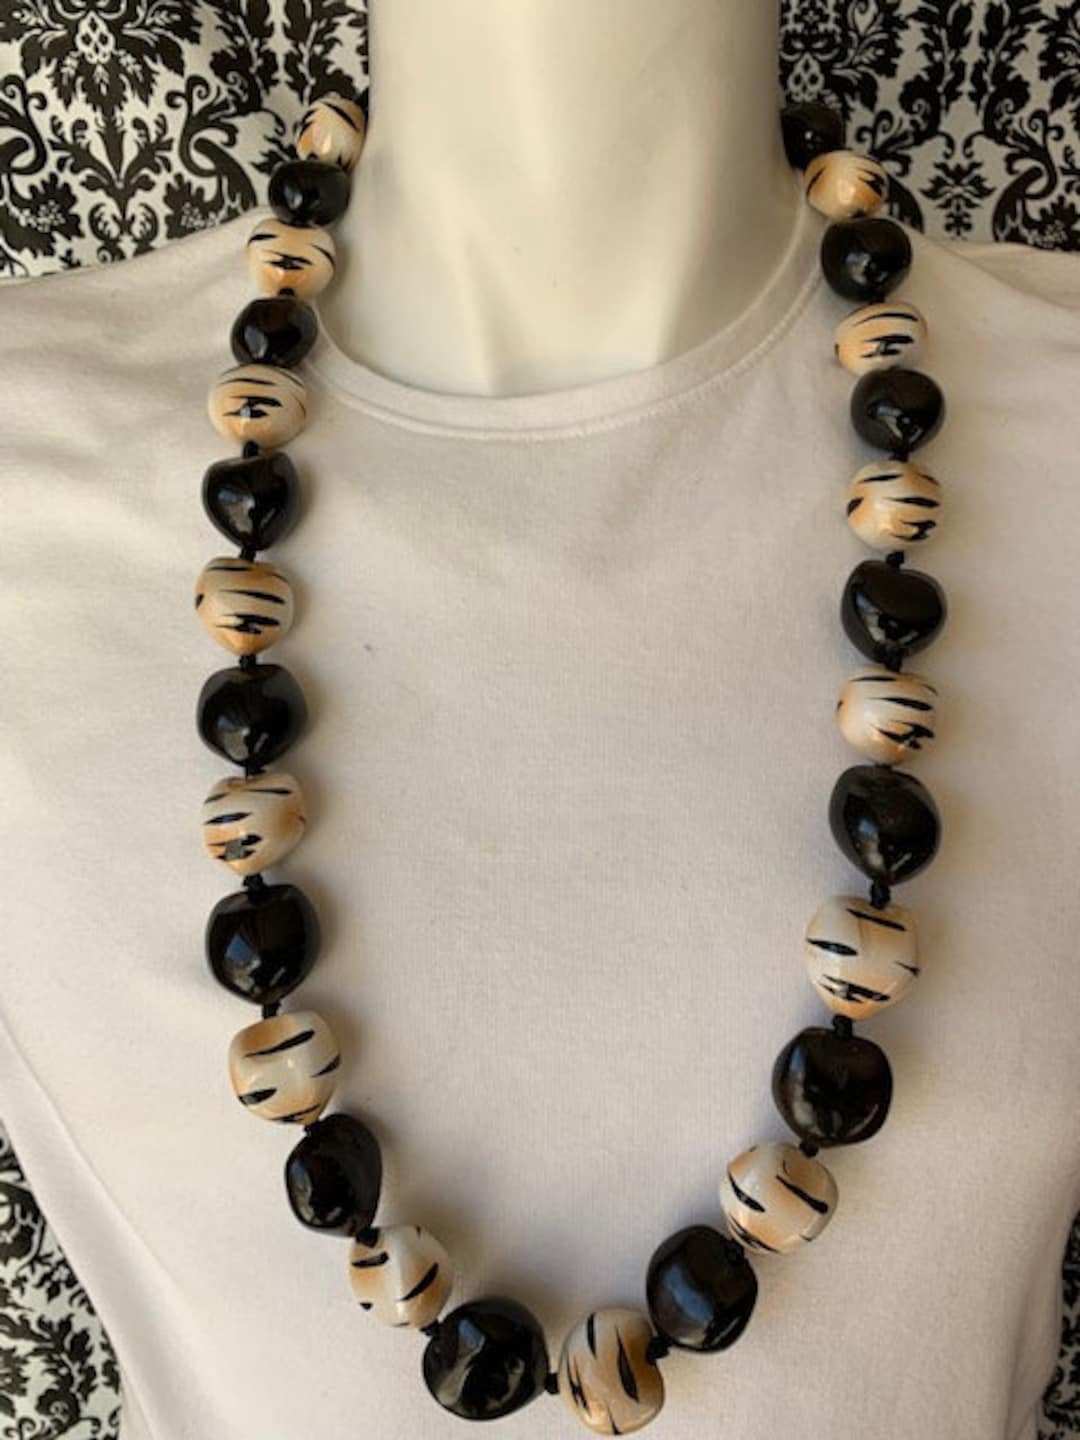 Amazon.com: Chunky Hawaiian Kukui Nut Lei Necklace with Ribbon Bow Closure  Graduation Gift (Black Blue Bead): Clothing, Shoes & Jewelry